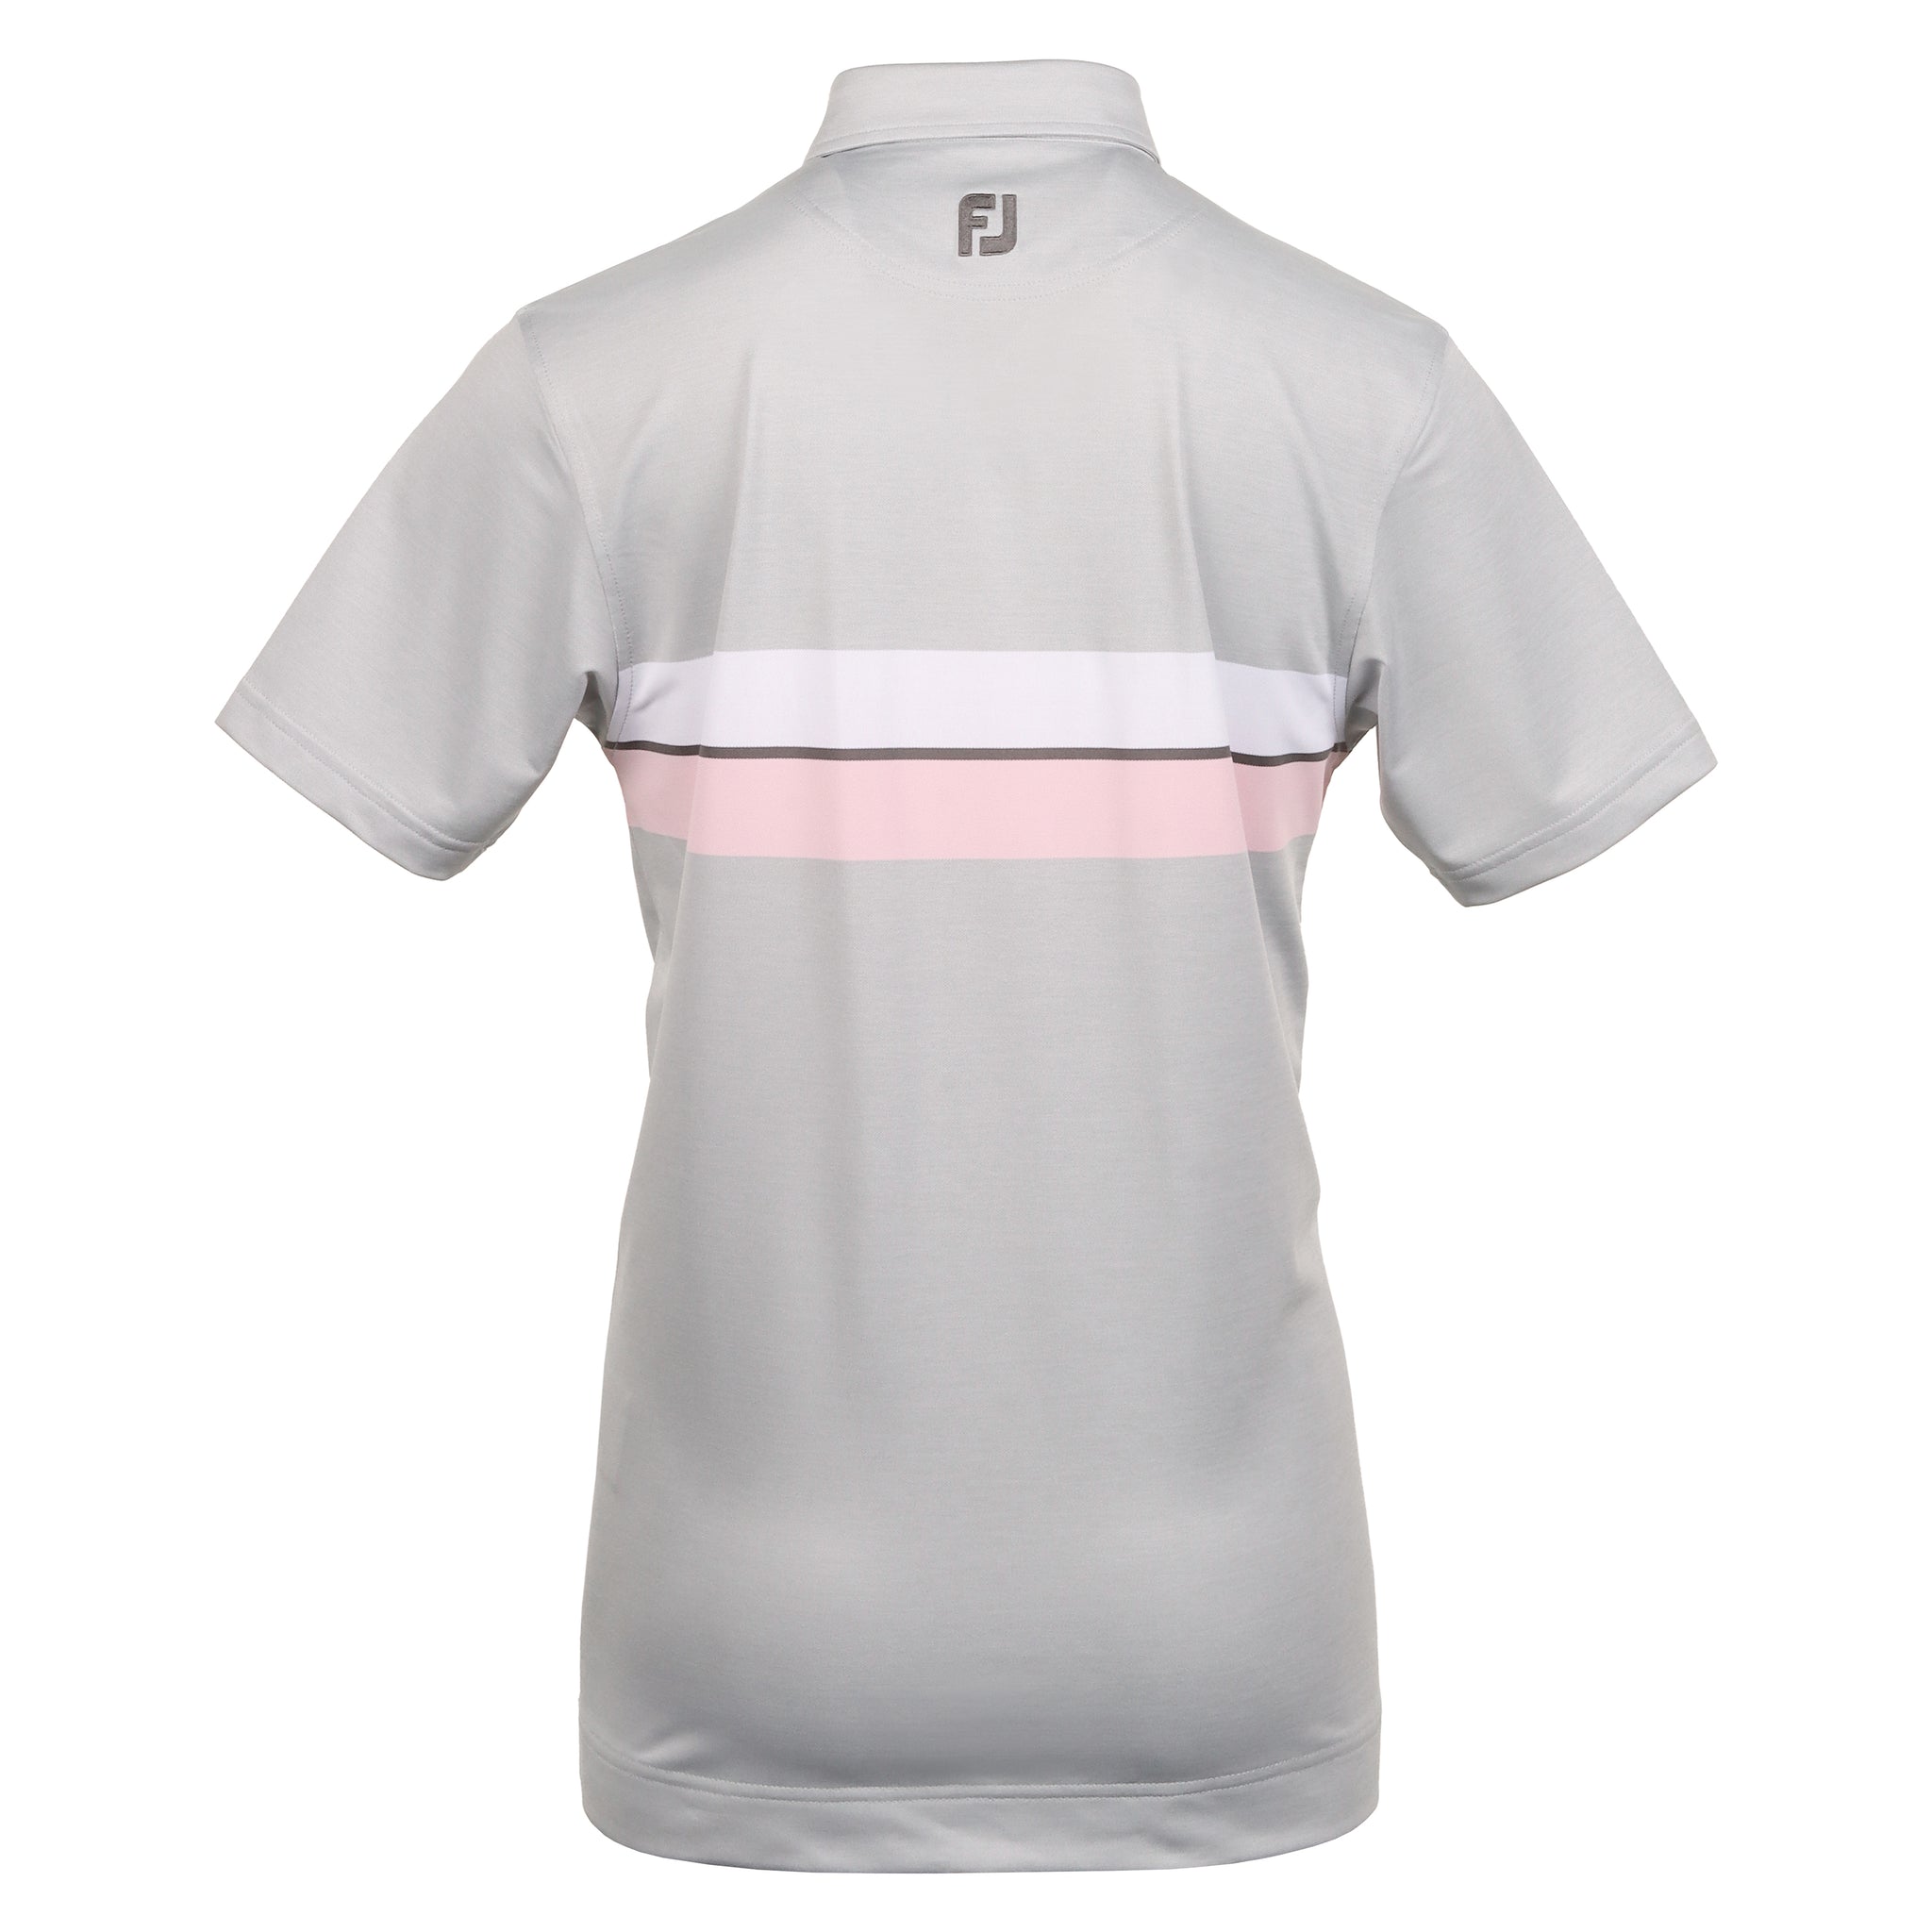 FootJoy Golf Double Chest Band Pique Golf Shirt